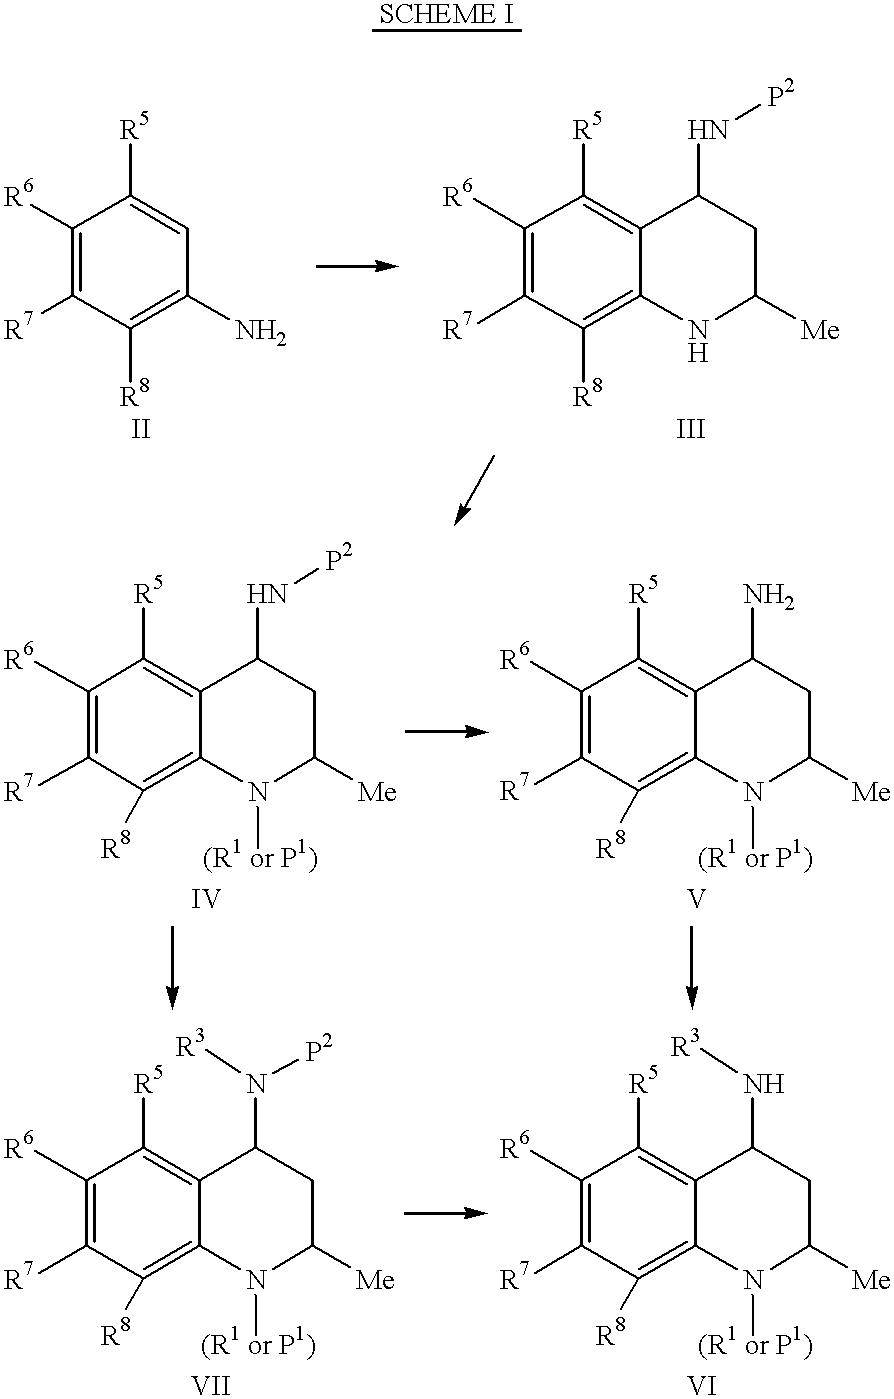 4-carboxyamino-2-methyl-1,2,3,4,-tetrahydroquinolines